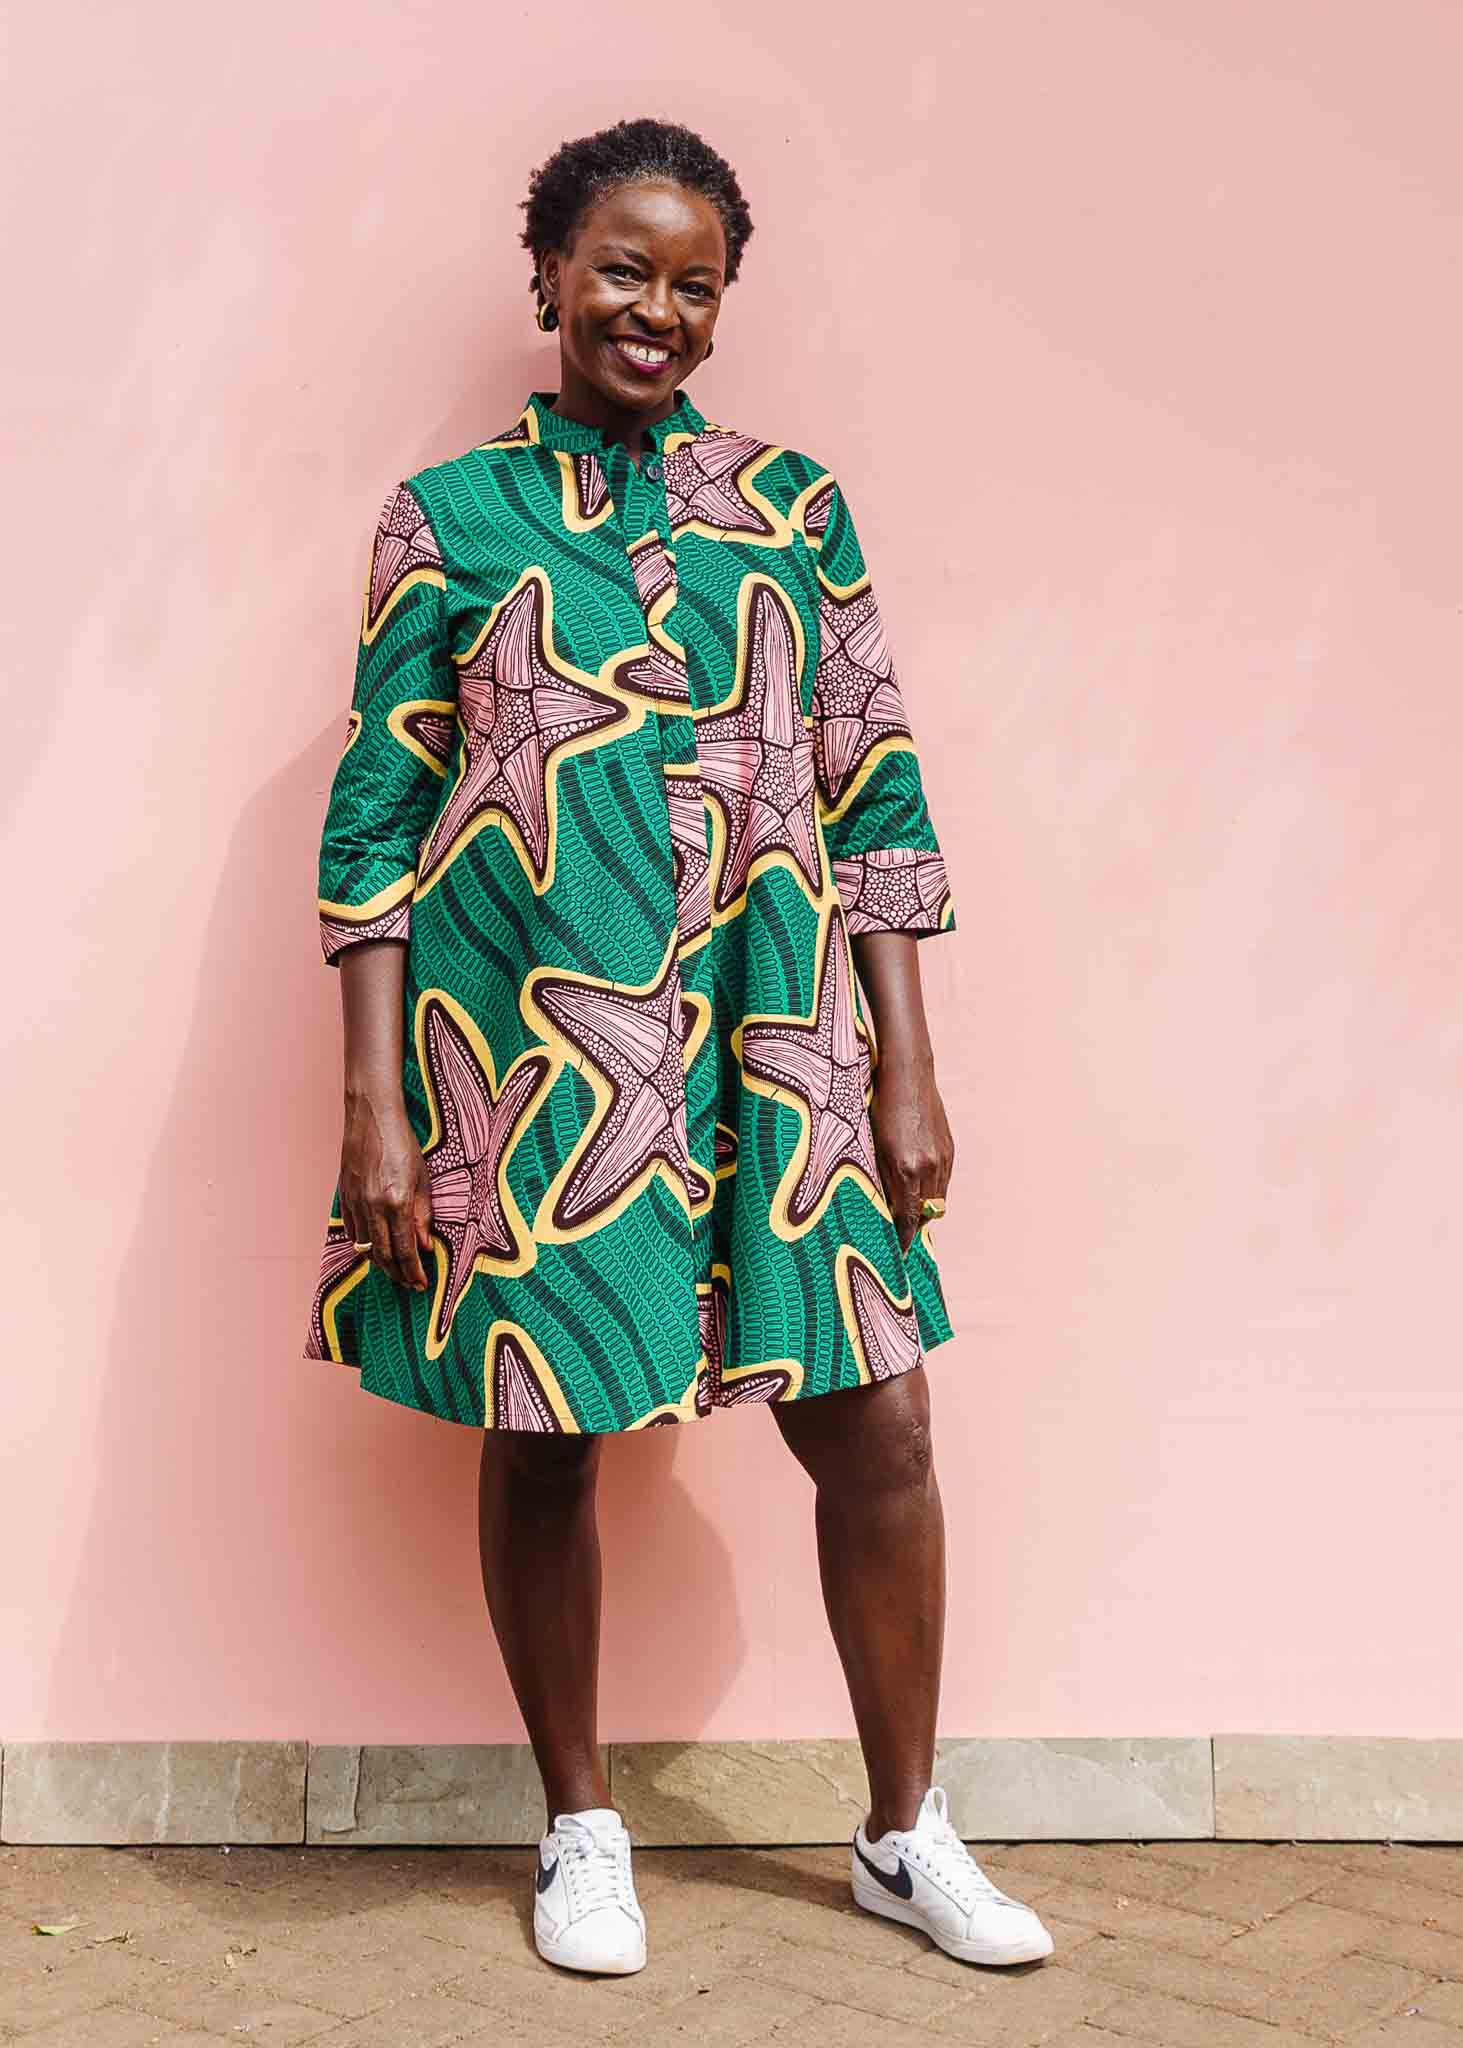 Playful Ghanaian Woman in Vibrant Kente Cloth Dress - Cultural